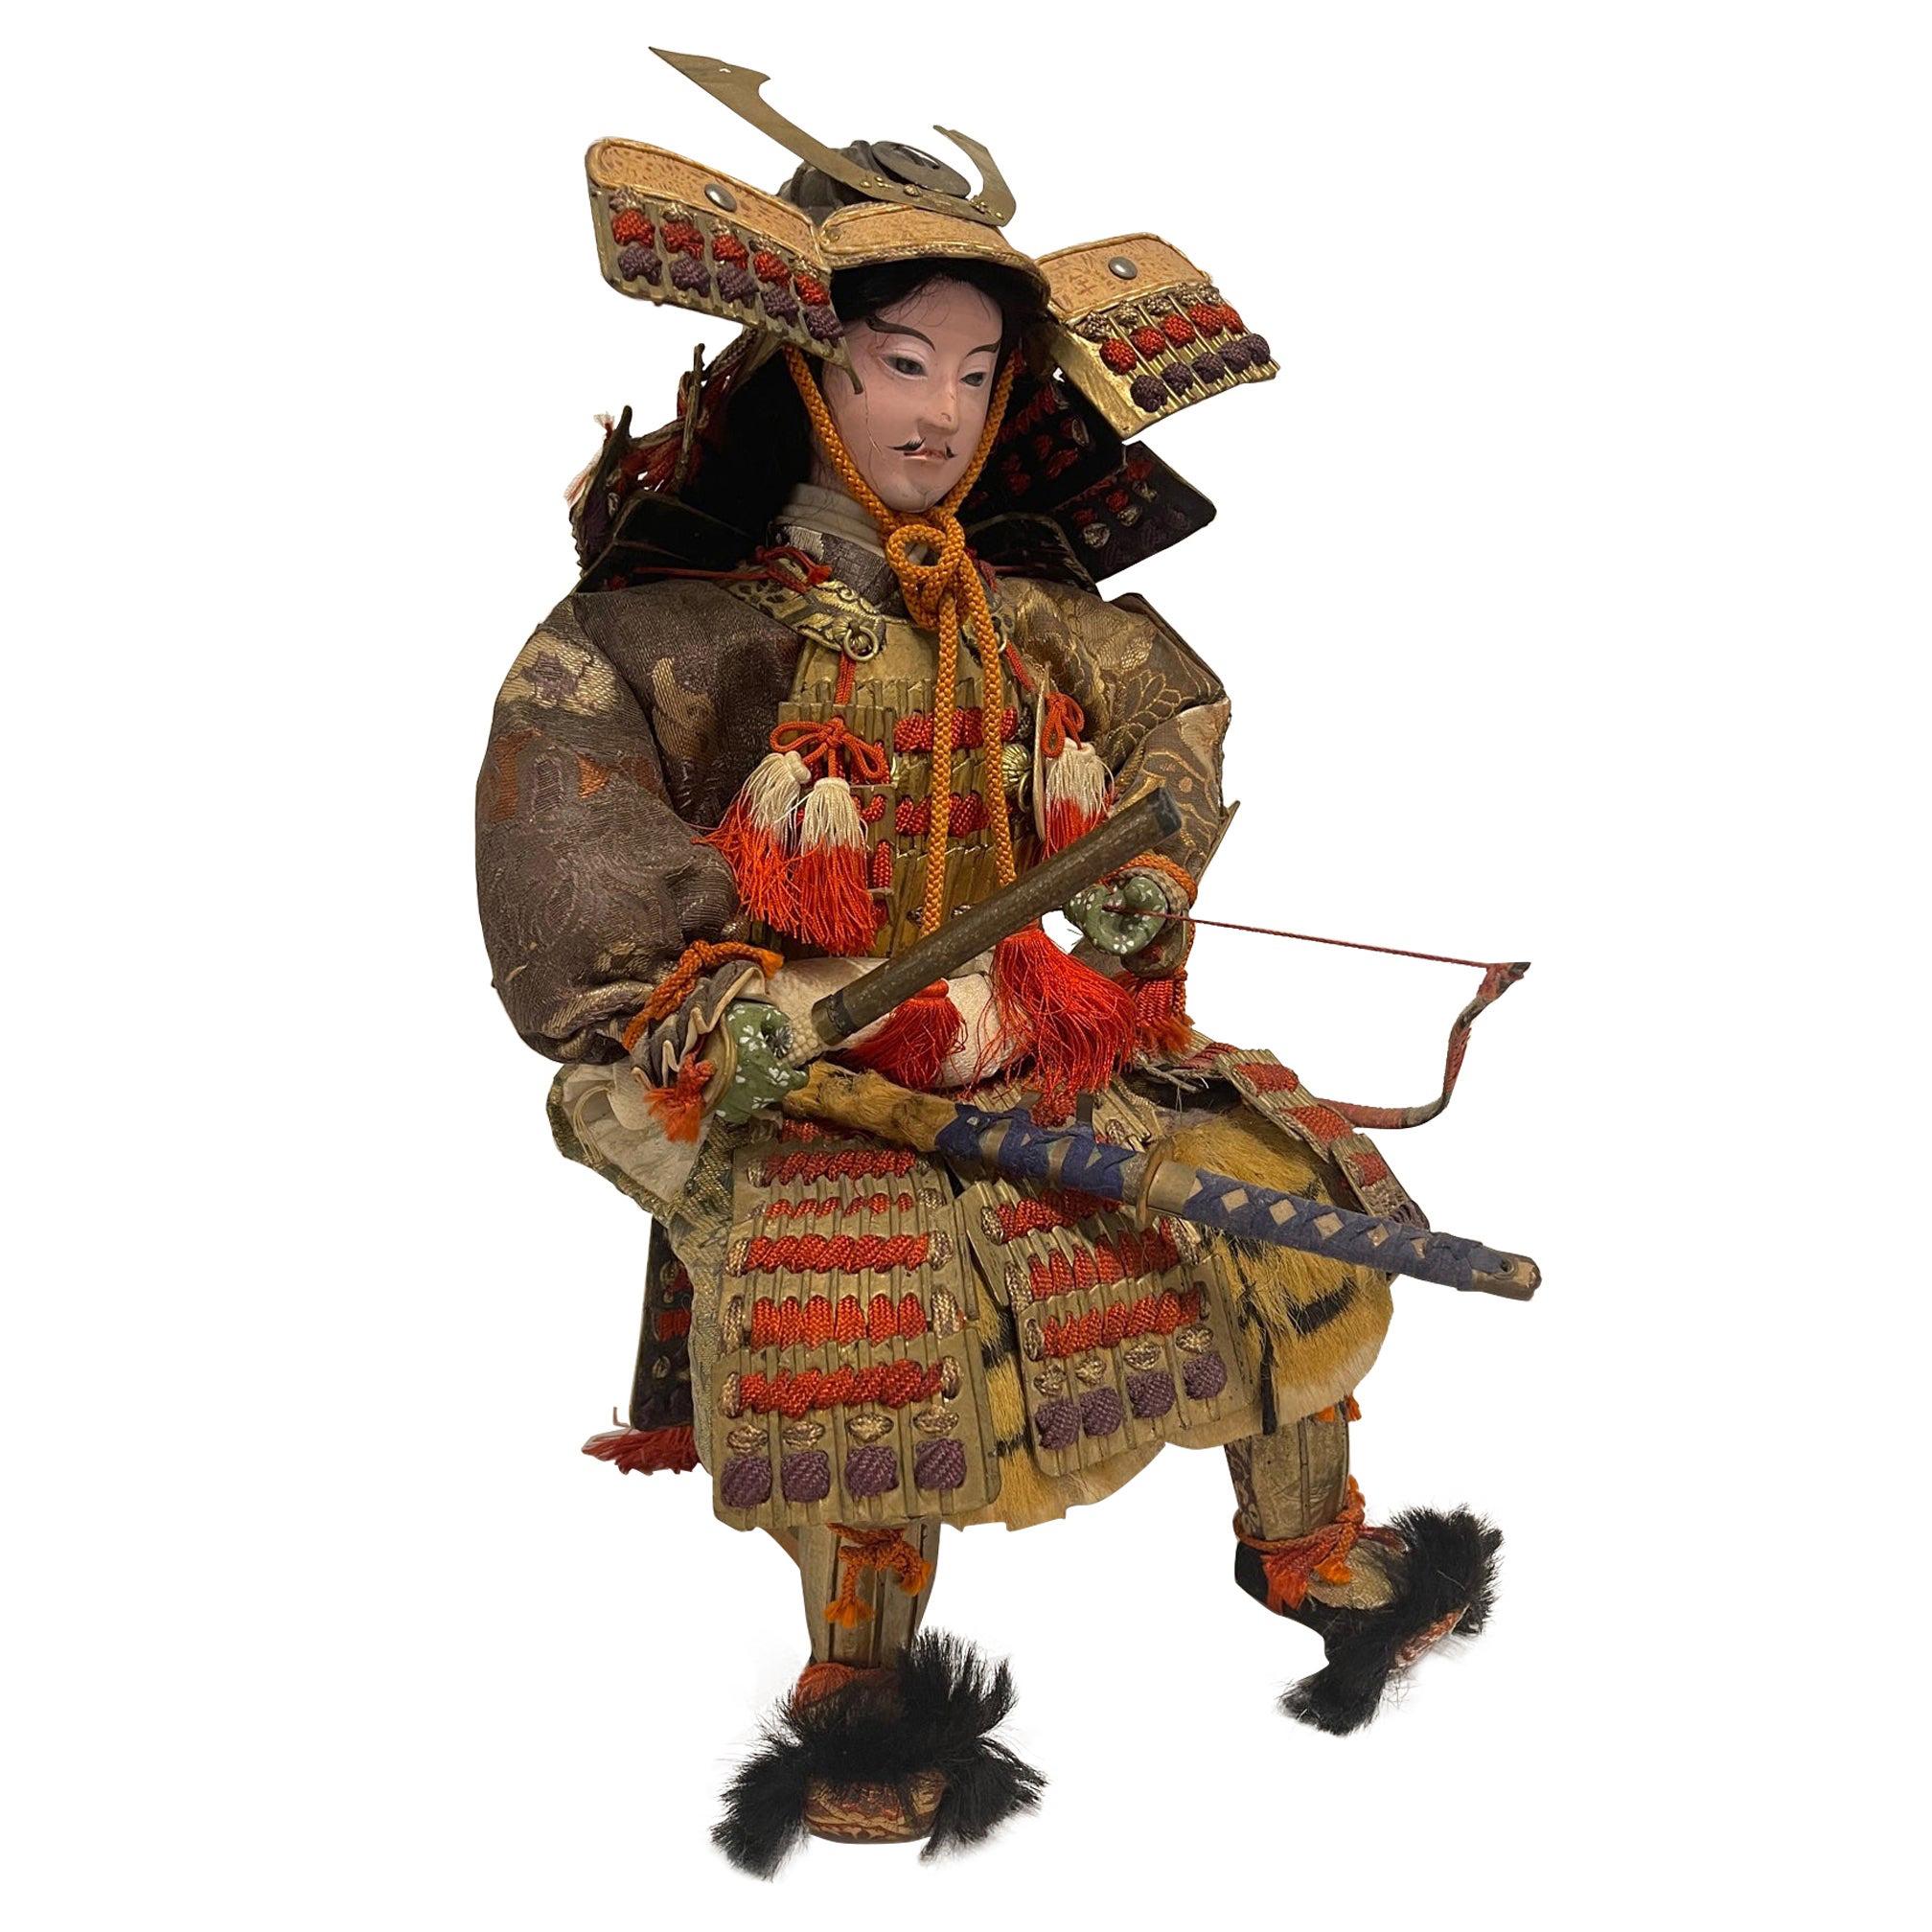 Japanese Samurai Doll or Figure, Meiji Period, Circa 1870s